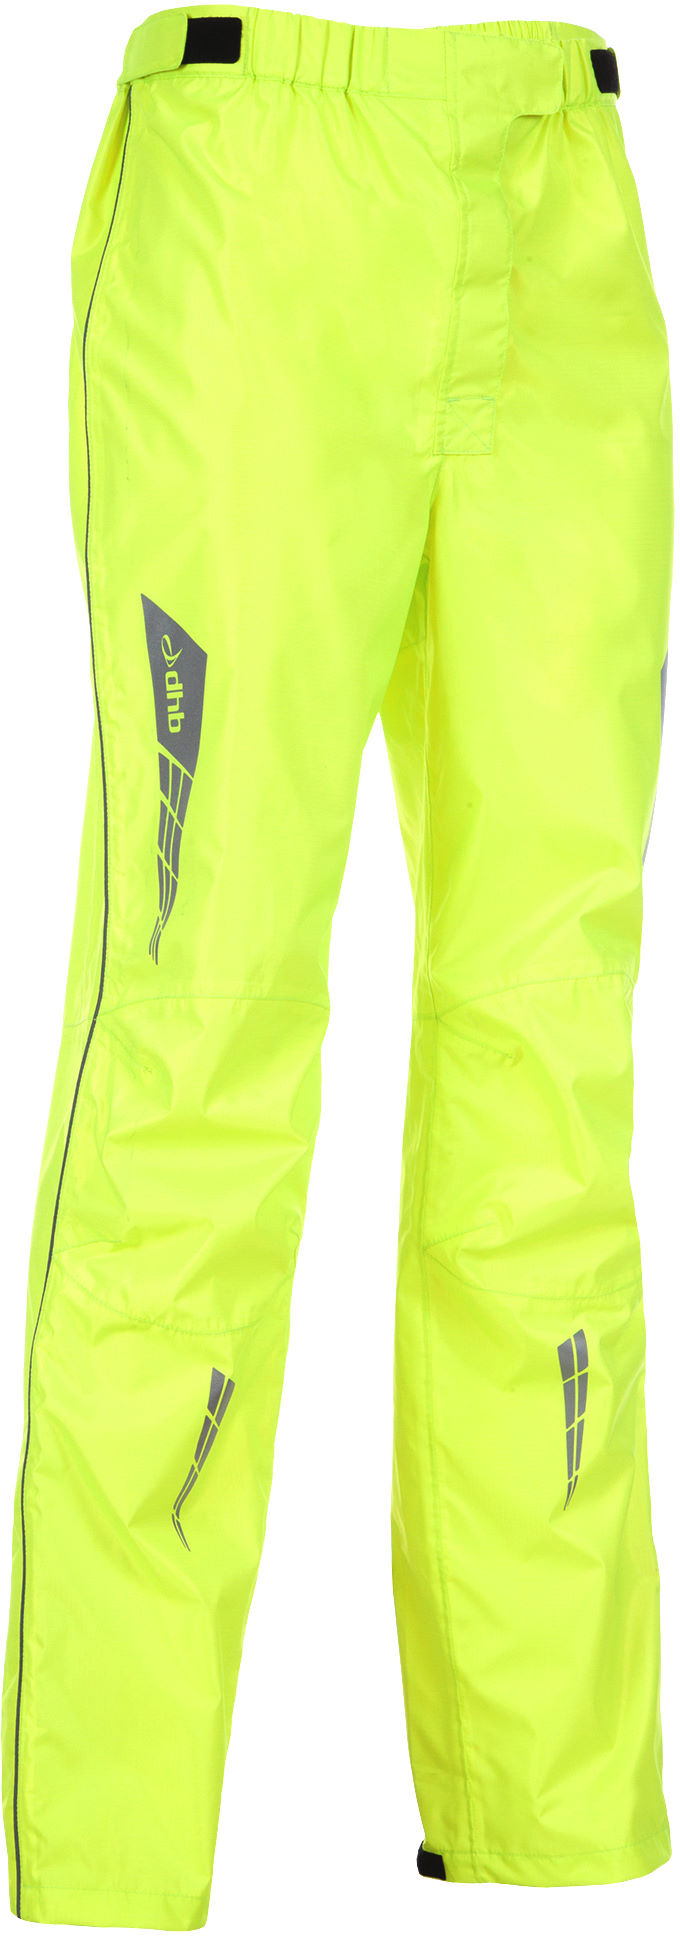 cycling trousers dhb mono hi viz waterproof overtrouser XZZBCWB